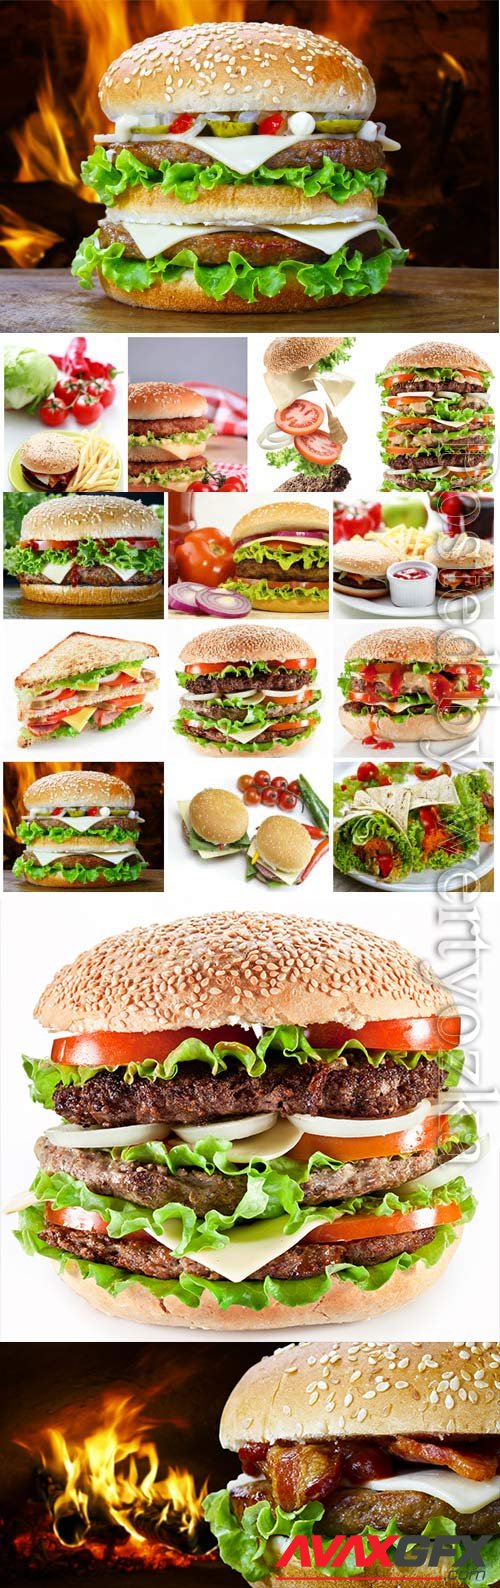 Hamburger, fast food stock photo